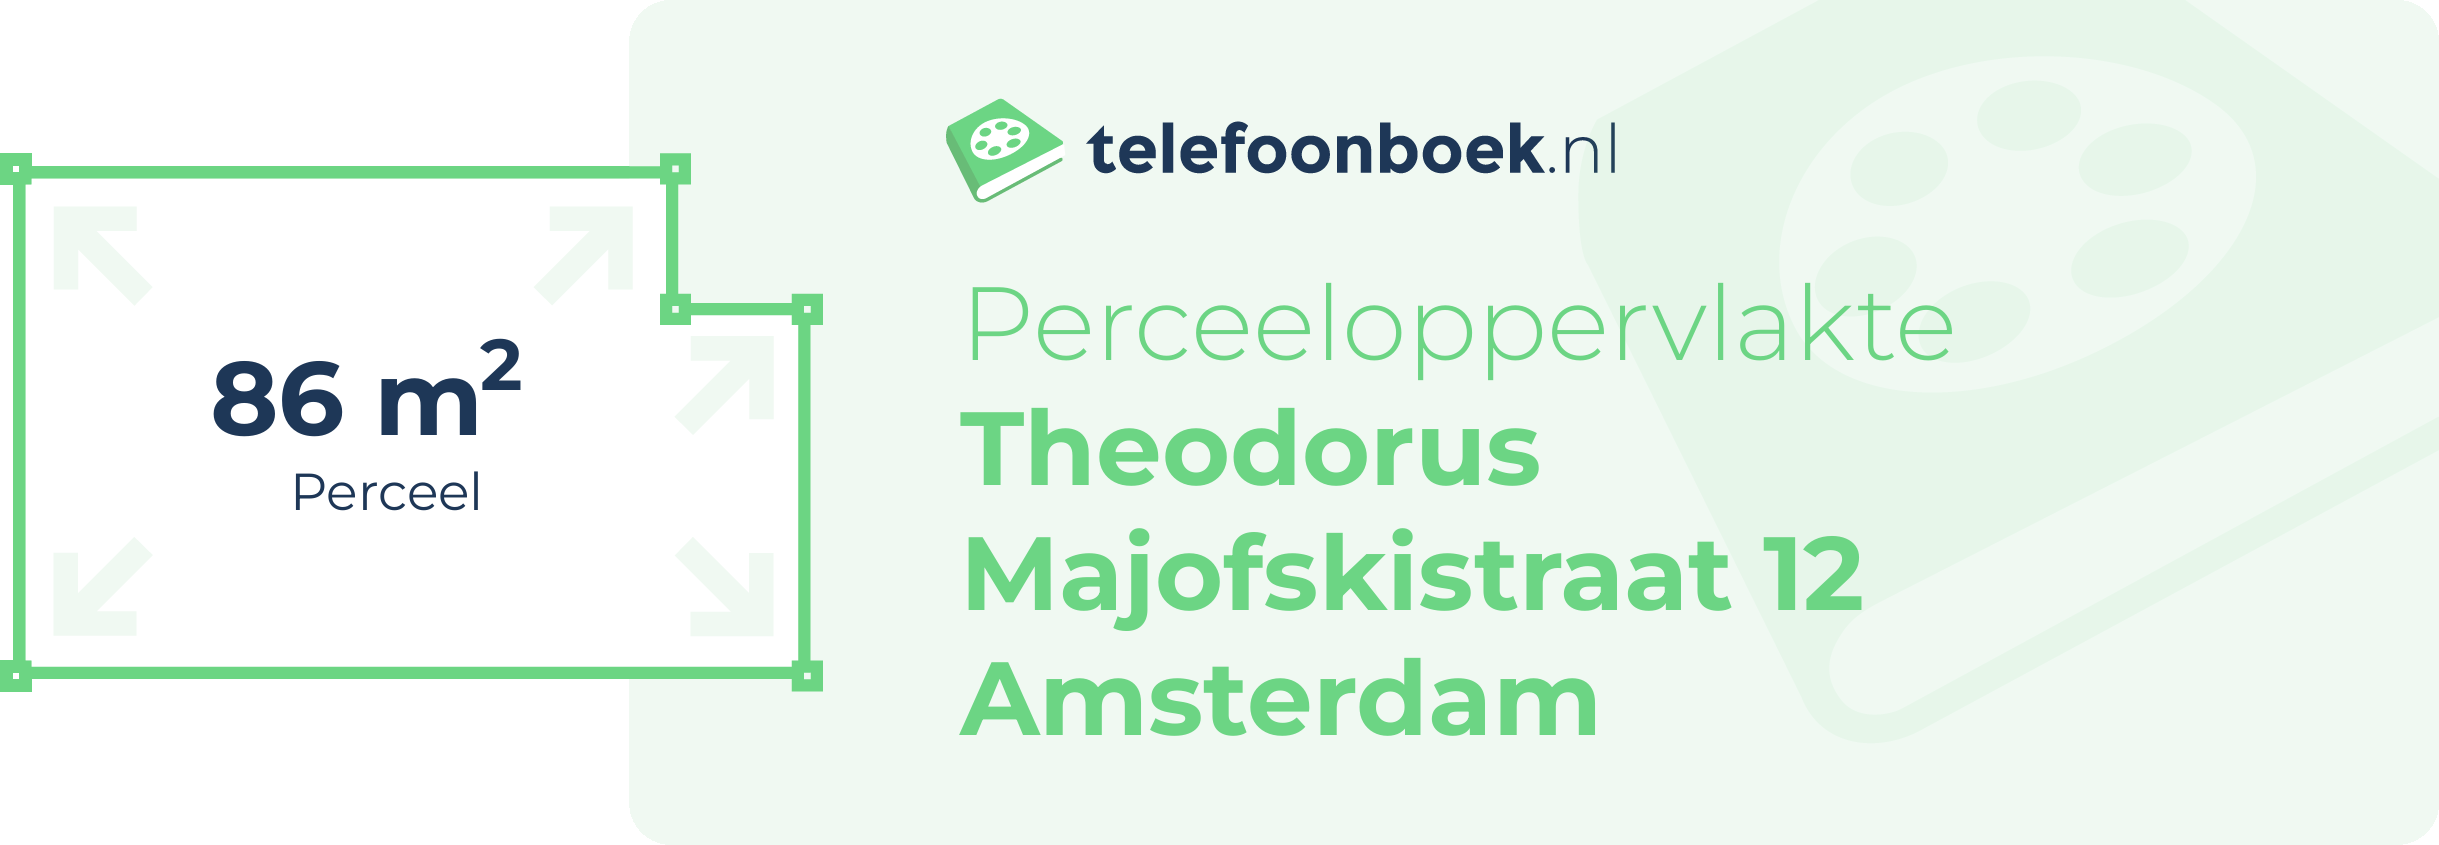 Perceeloppervlakte Theodorus Majofskistraat 12 Amsterdam